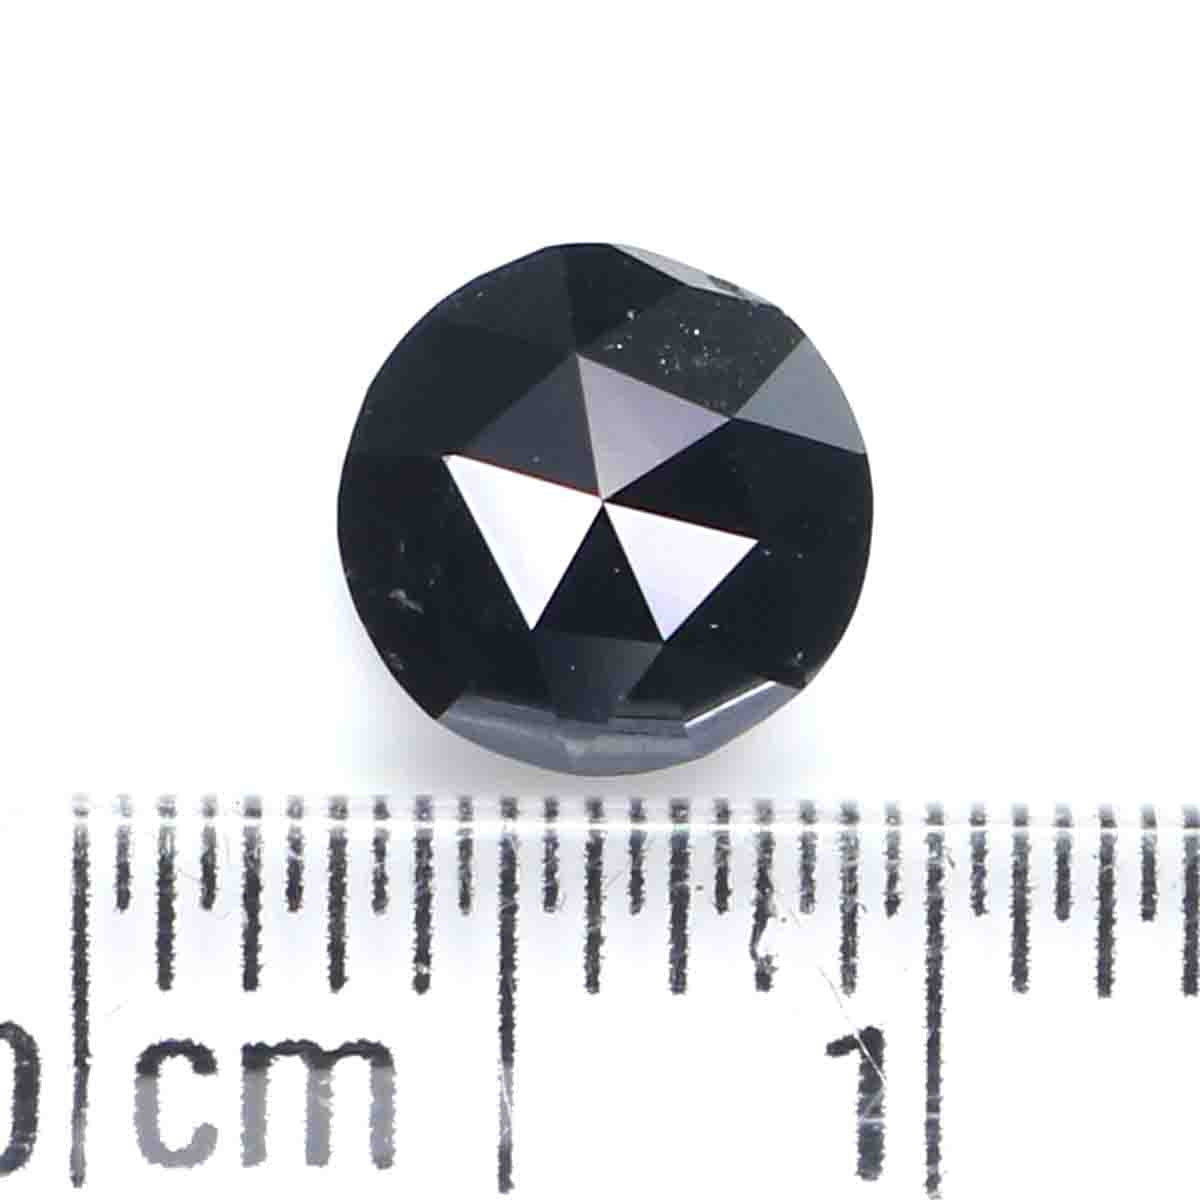 Natural Loose Rose Cut Black Color Diamond 0.98 CT 6.30 MM Round Rose Cut Shape Diamond KR1844